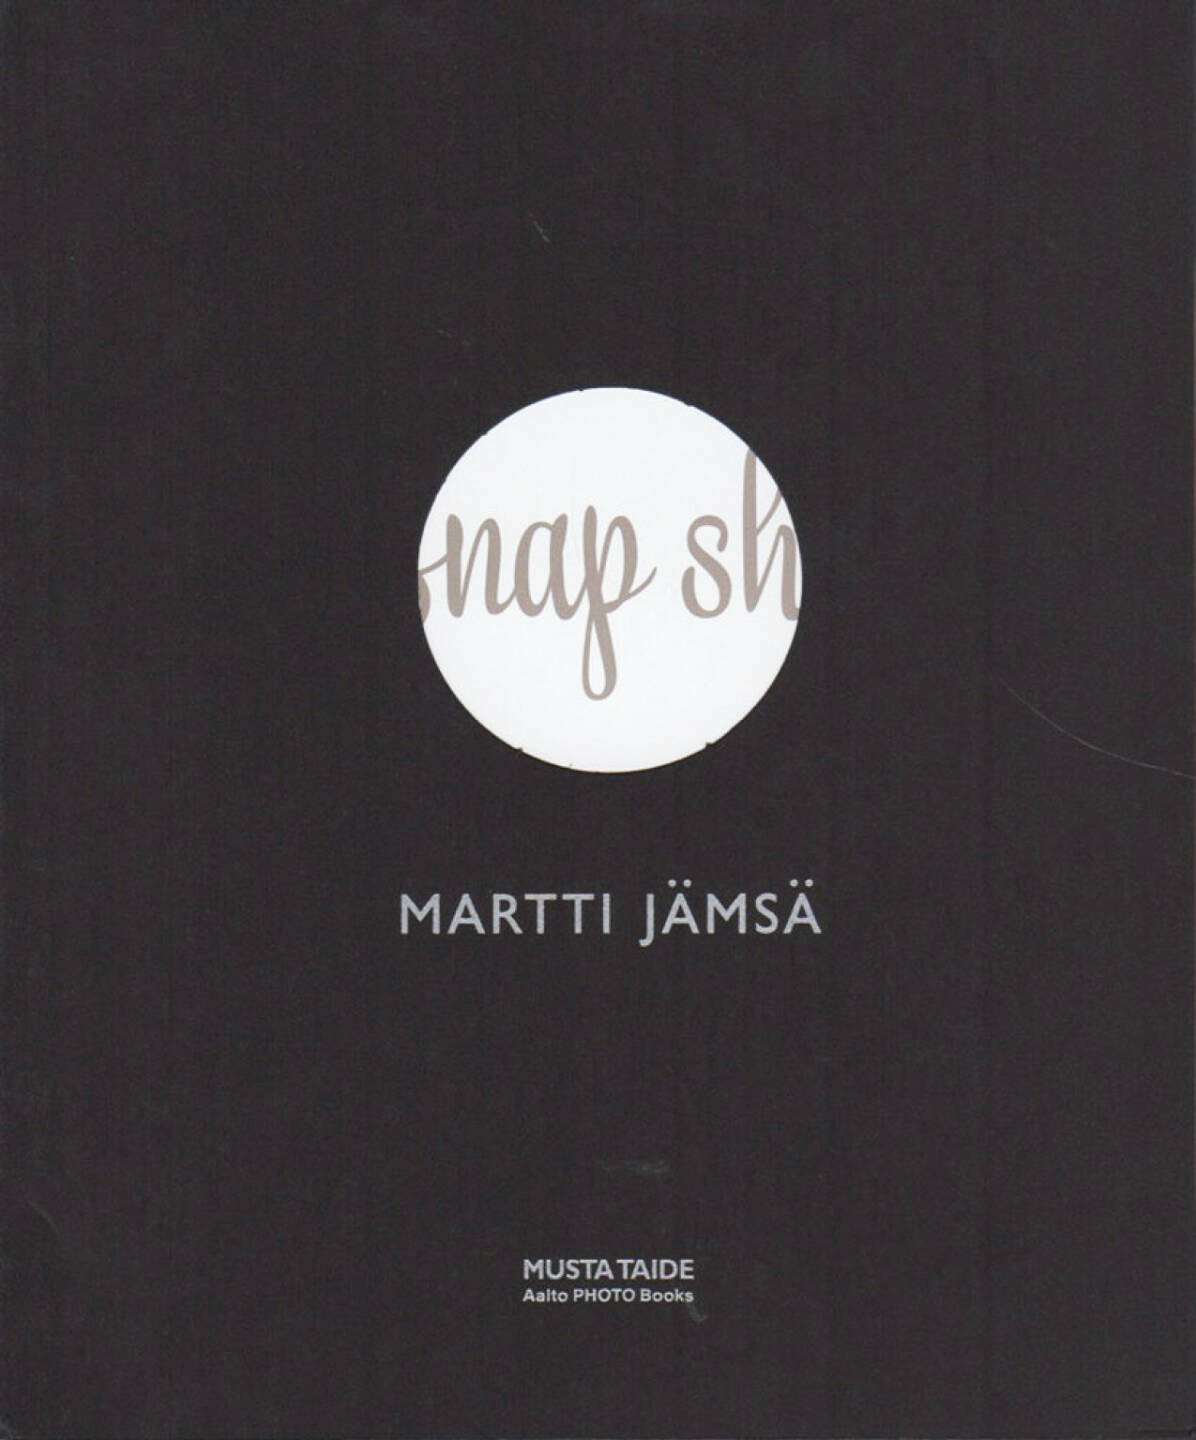 Martti Jämsä - Snap shot, Musta Taide Aalto Photo Books 2014, Cover - http://josefchladek.com/book/martti_jamsa_-_snap_shot